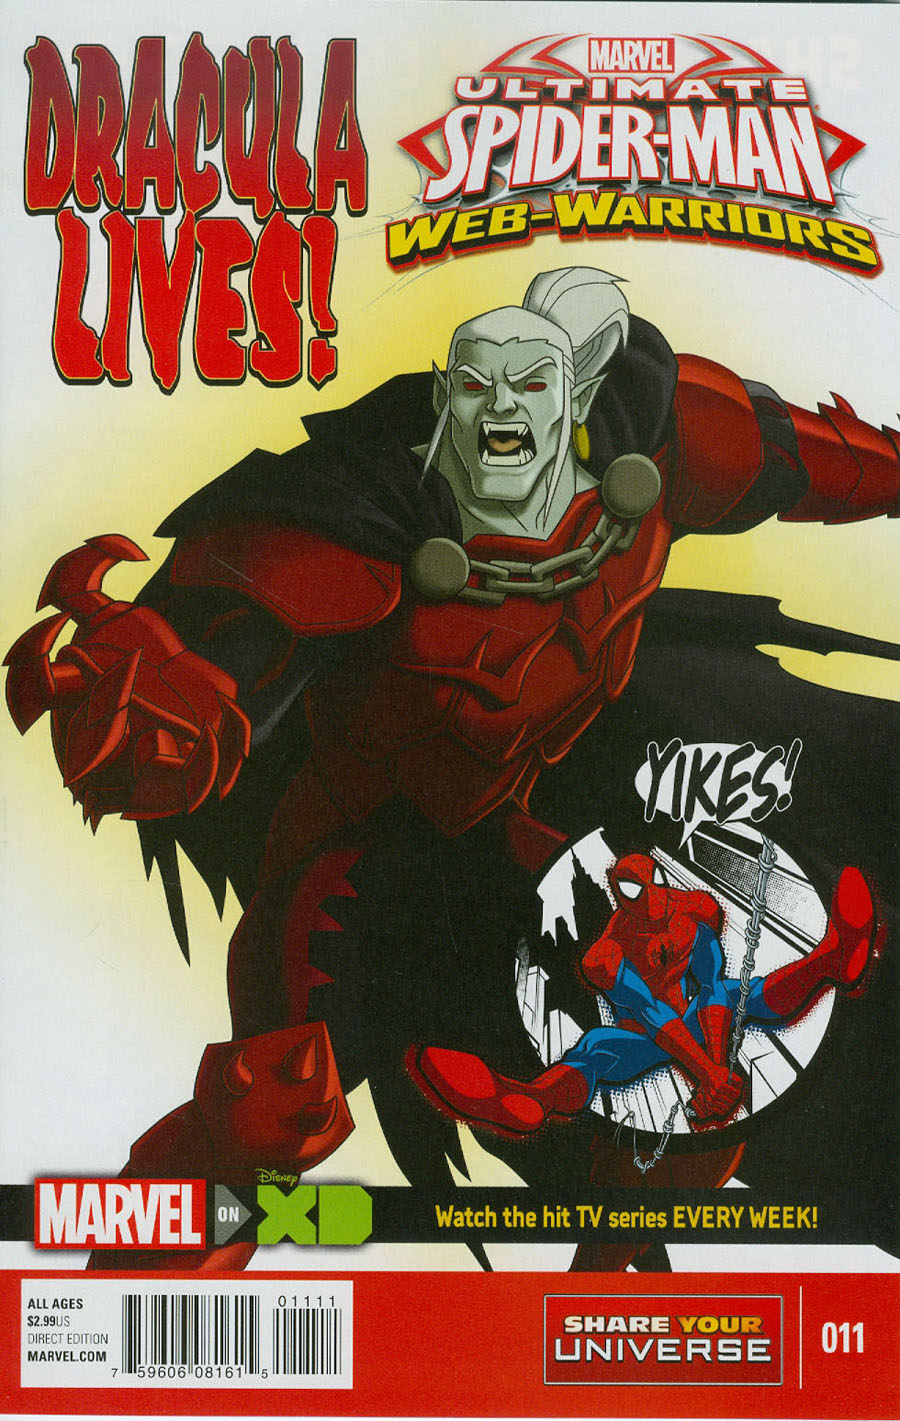 Marvel Universe Ultimate Spider-Man Web Warriors #11